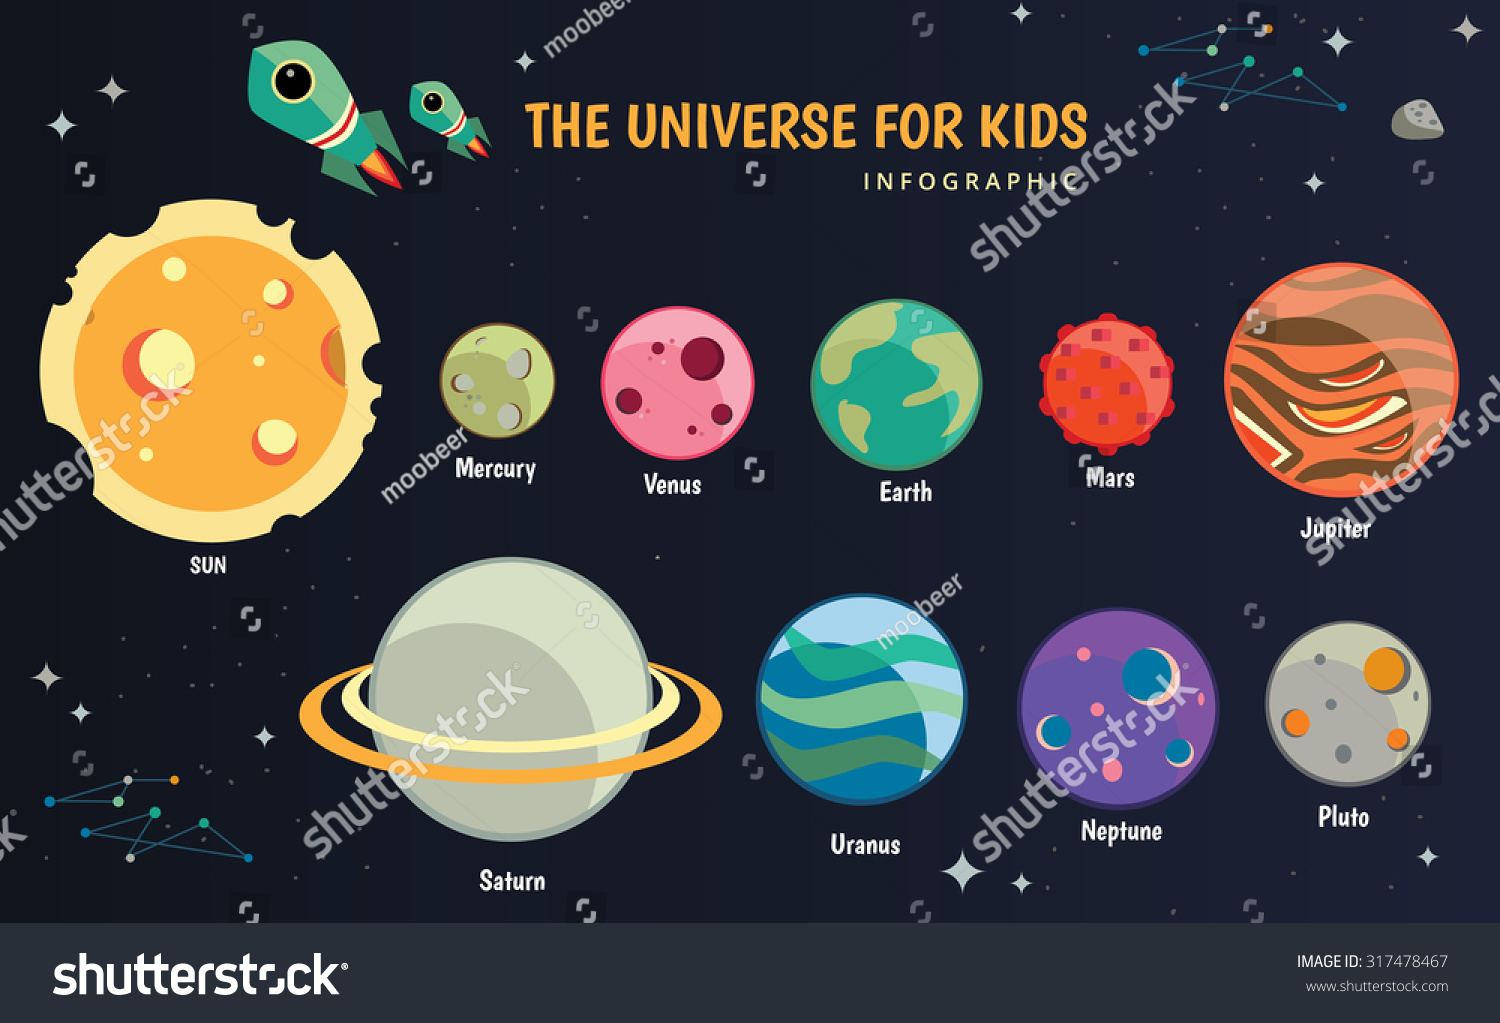 Mercury Planet for Kids